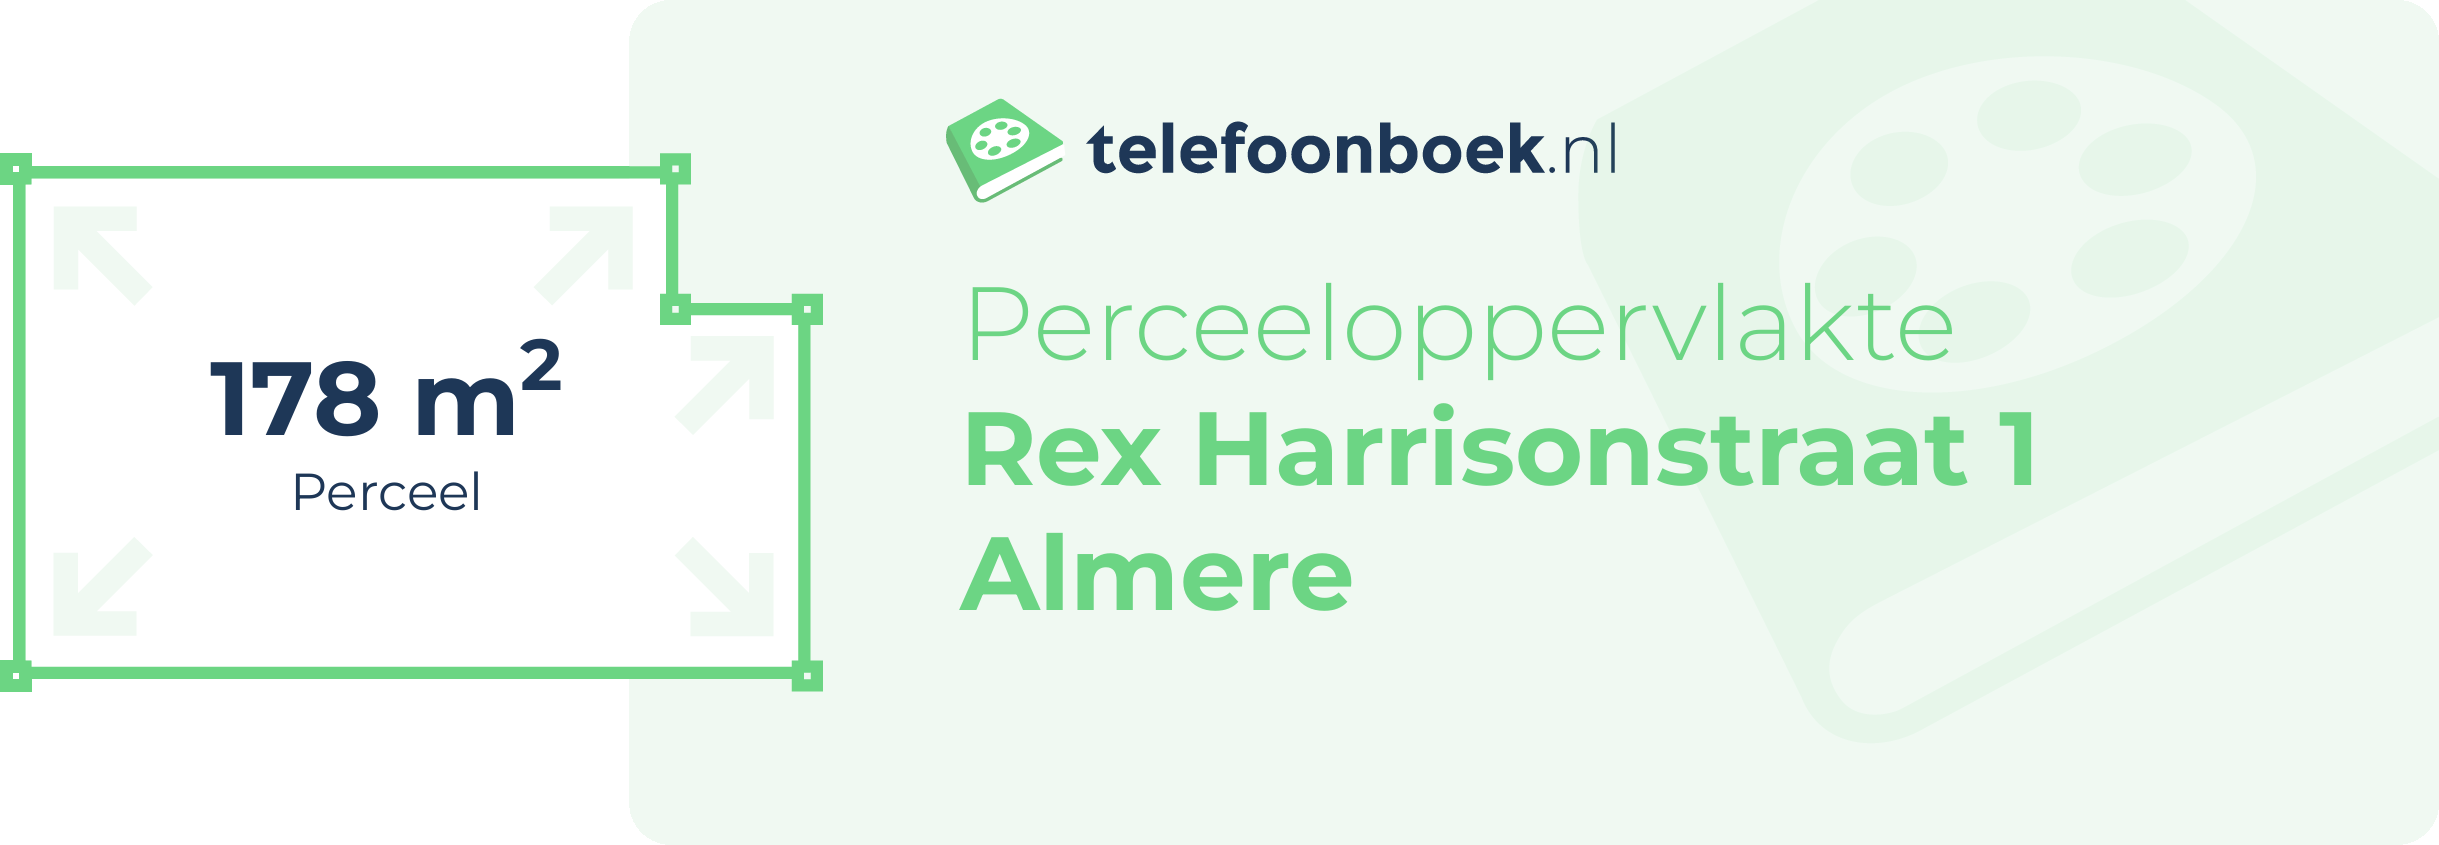 Perceeloppervlakte Rex Harrisonstraat 1 Almere